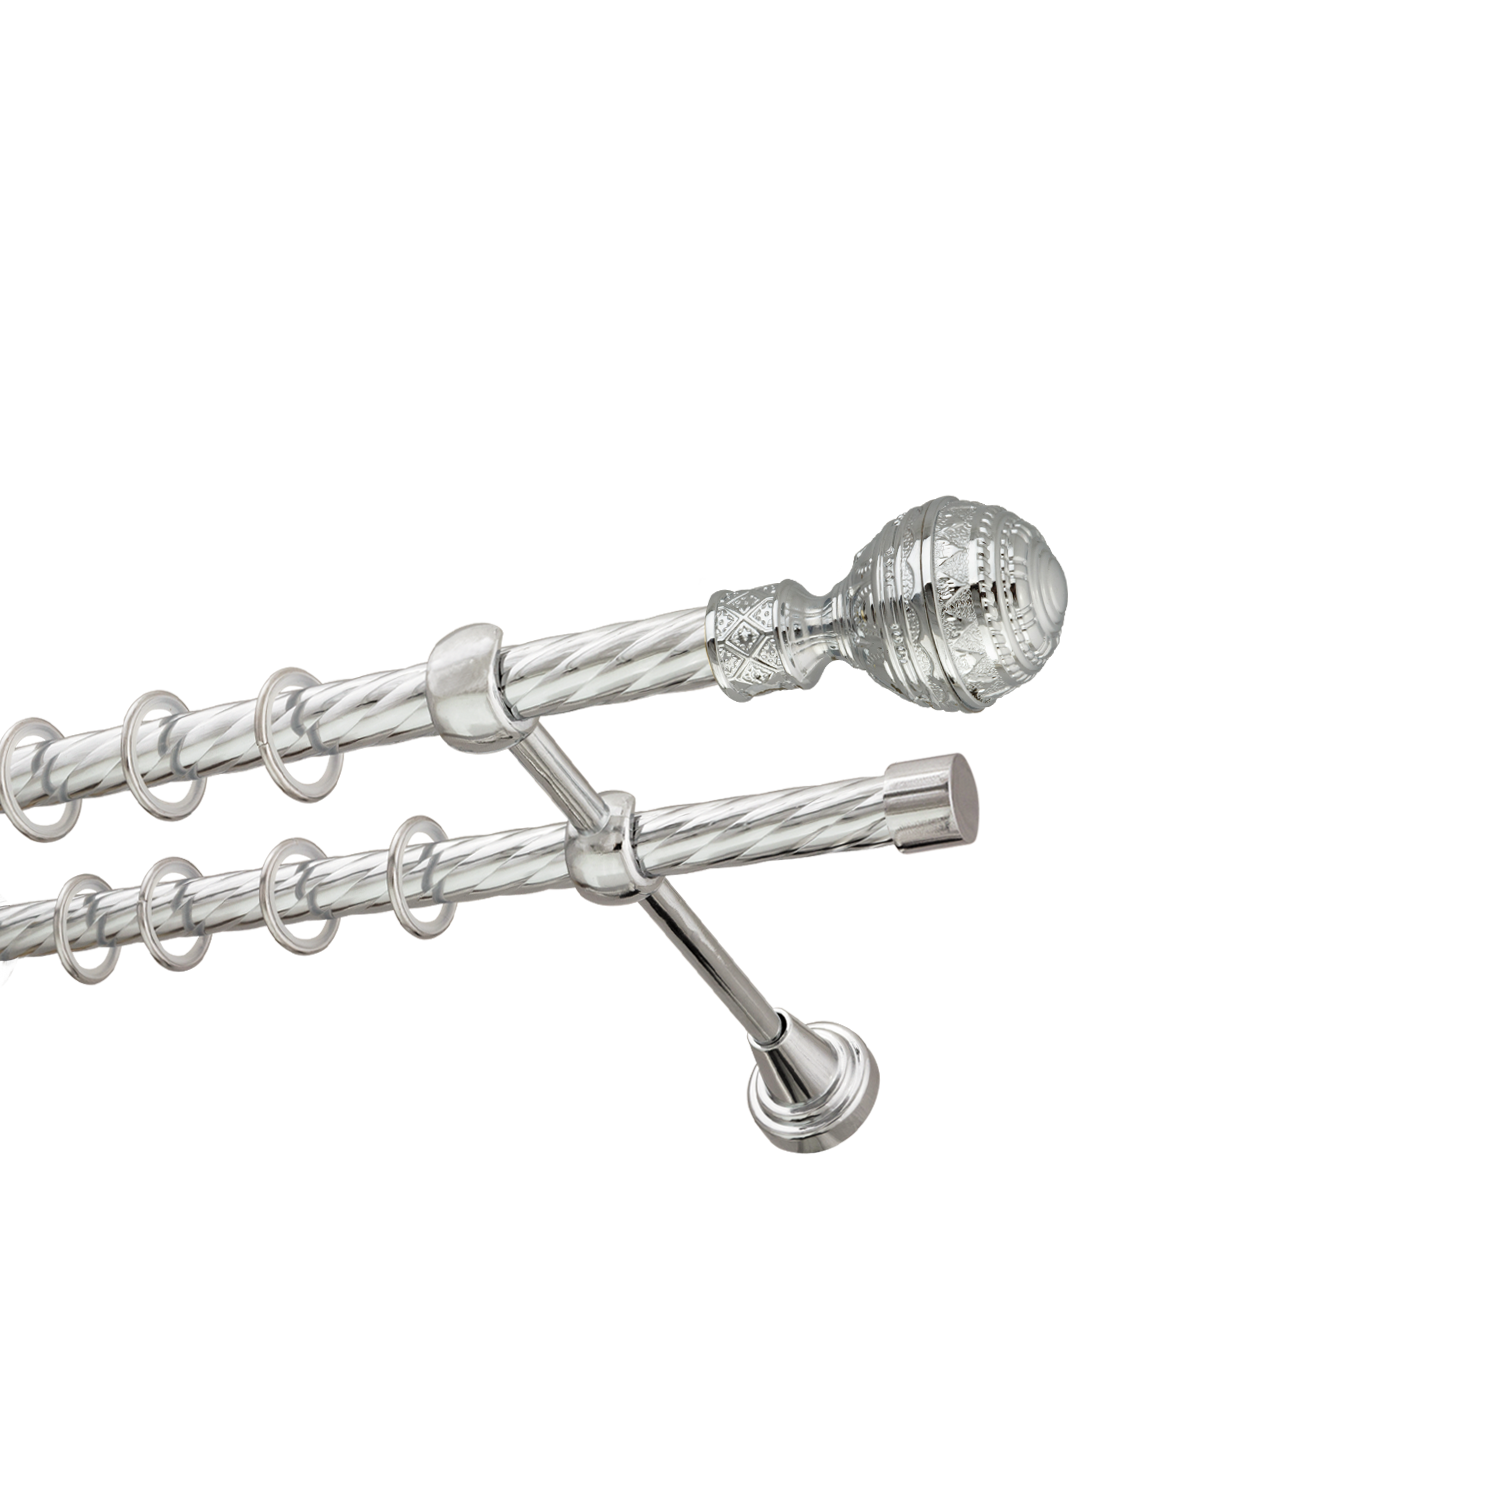 Металлический карниз для штор Роял, двухрядный 16/16 мм, серебро, витая штанга, длина 160 см - фото Wikidecor.ru